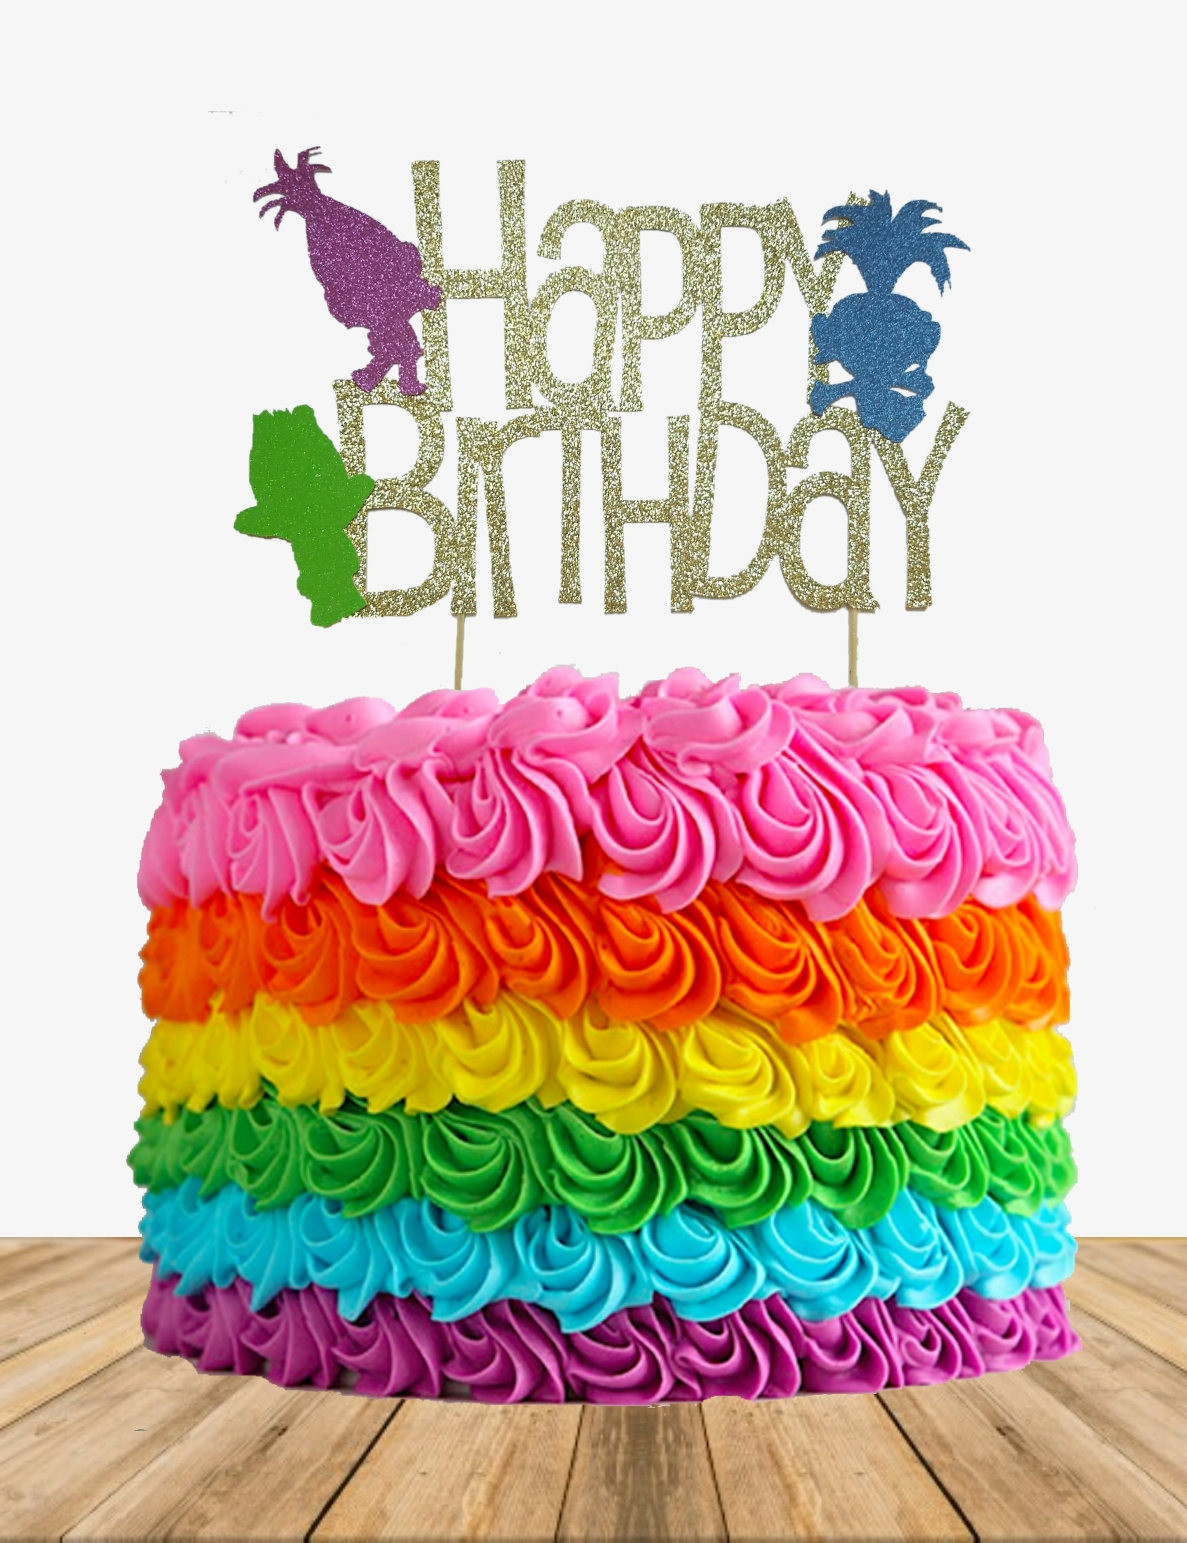 Best ideas about Trolls Birthday Cake Topper
. Save or Pin Troll Cake topper troll birthday cake topper troll birthday Now.